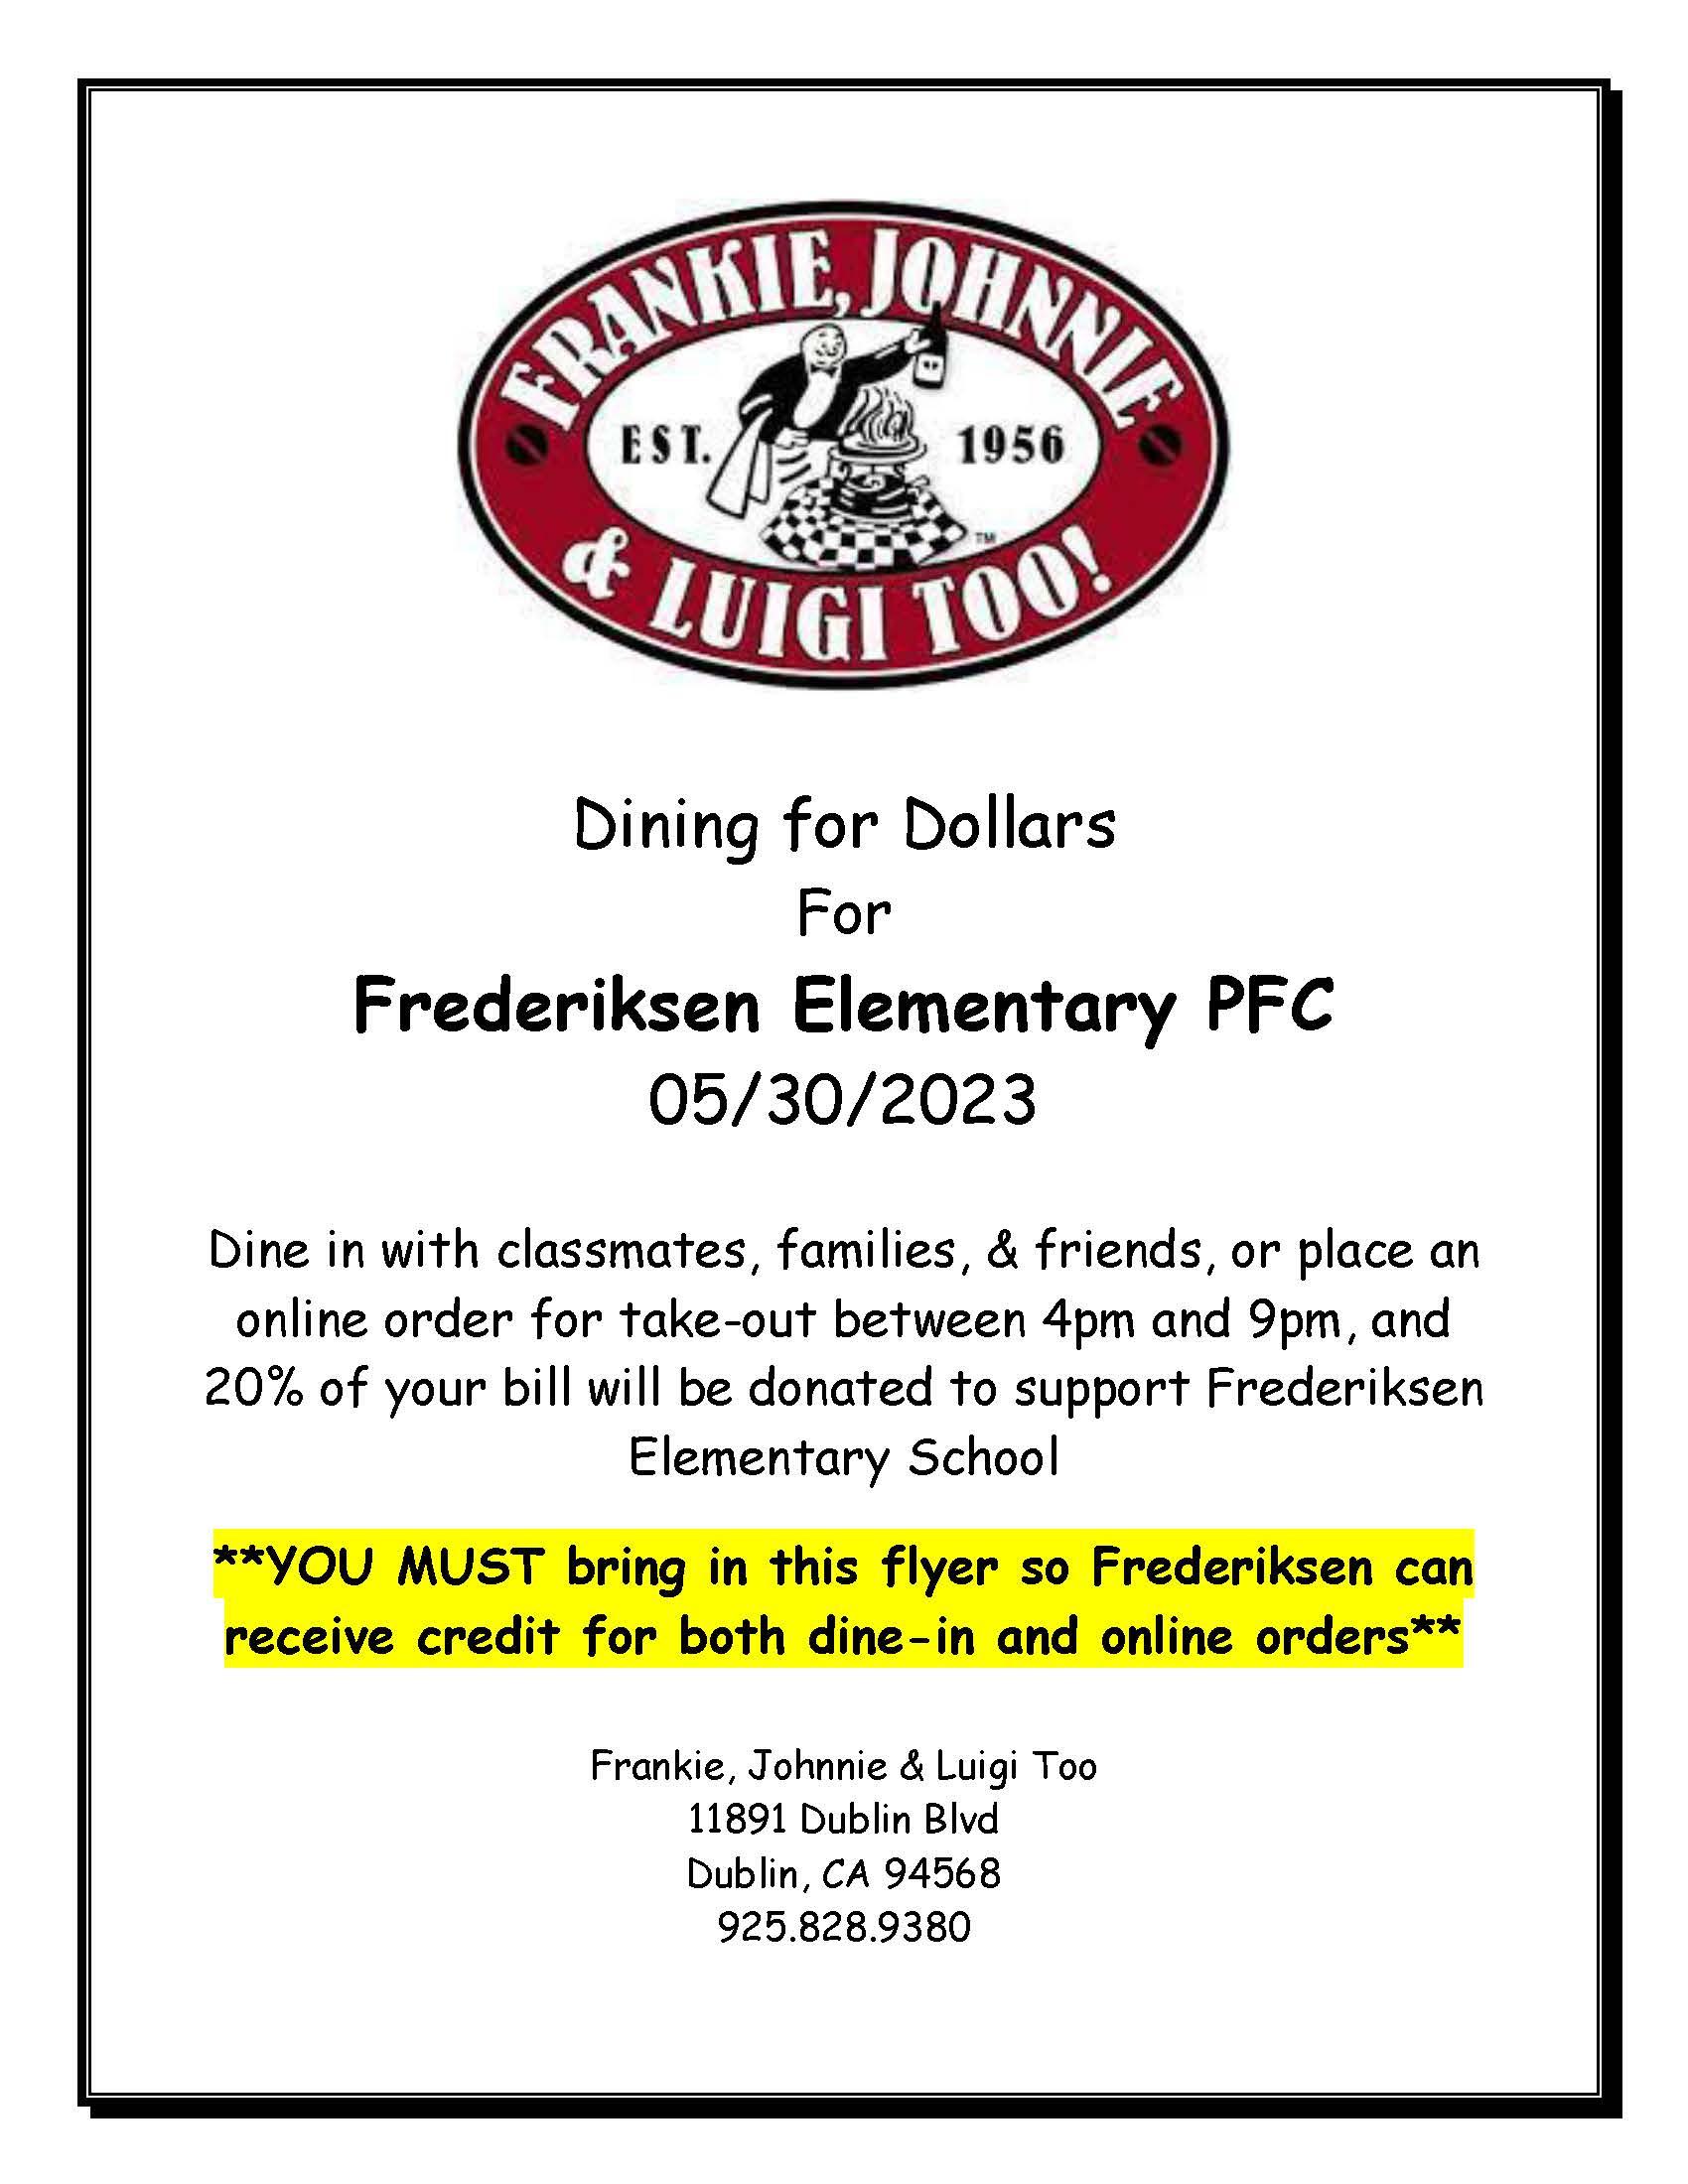 Frankie, Johnnie & Luigi Too, Dine Out! 5/30, 4-9pm